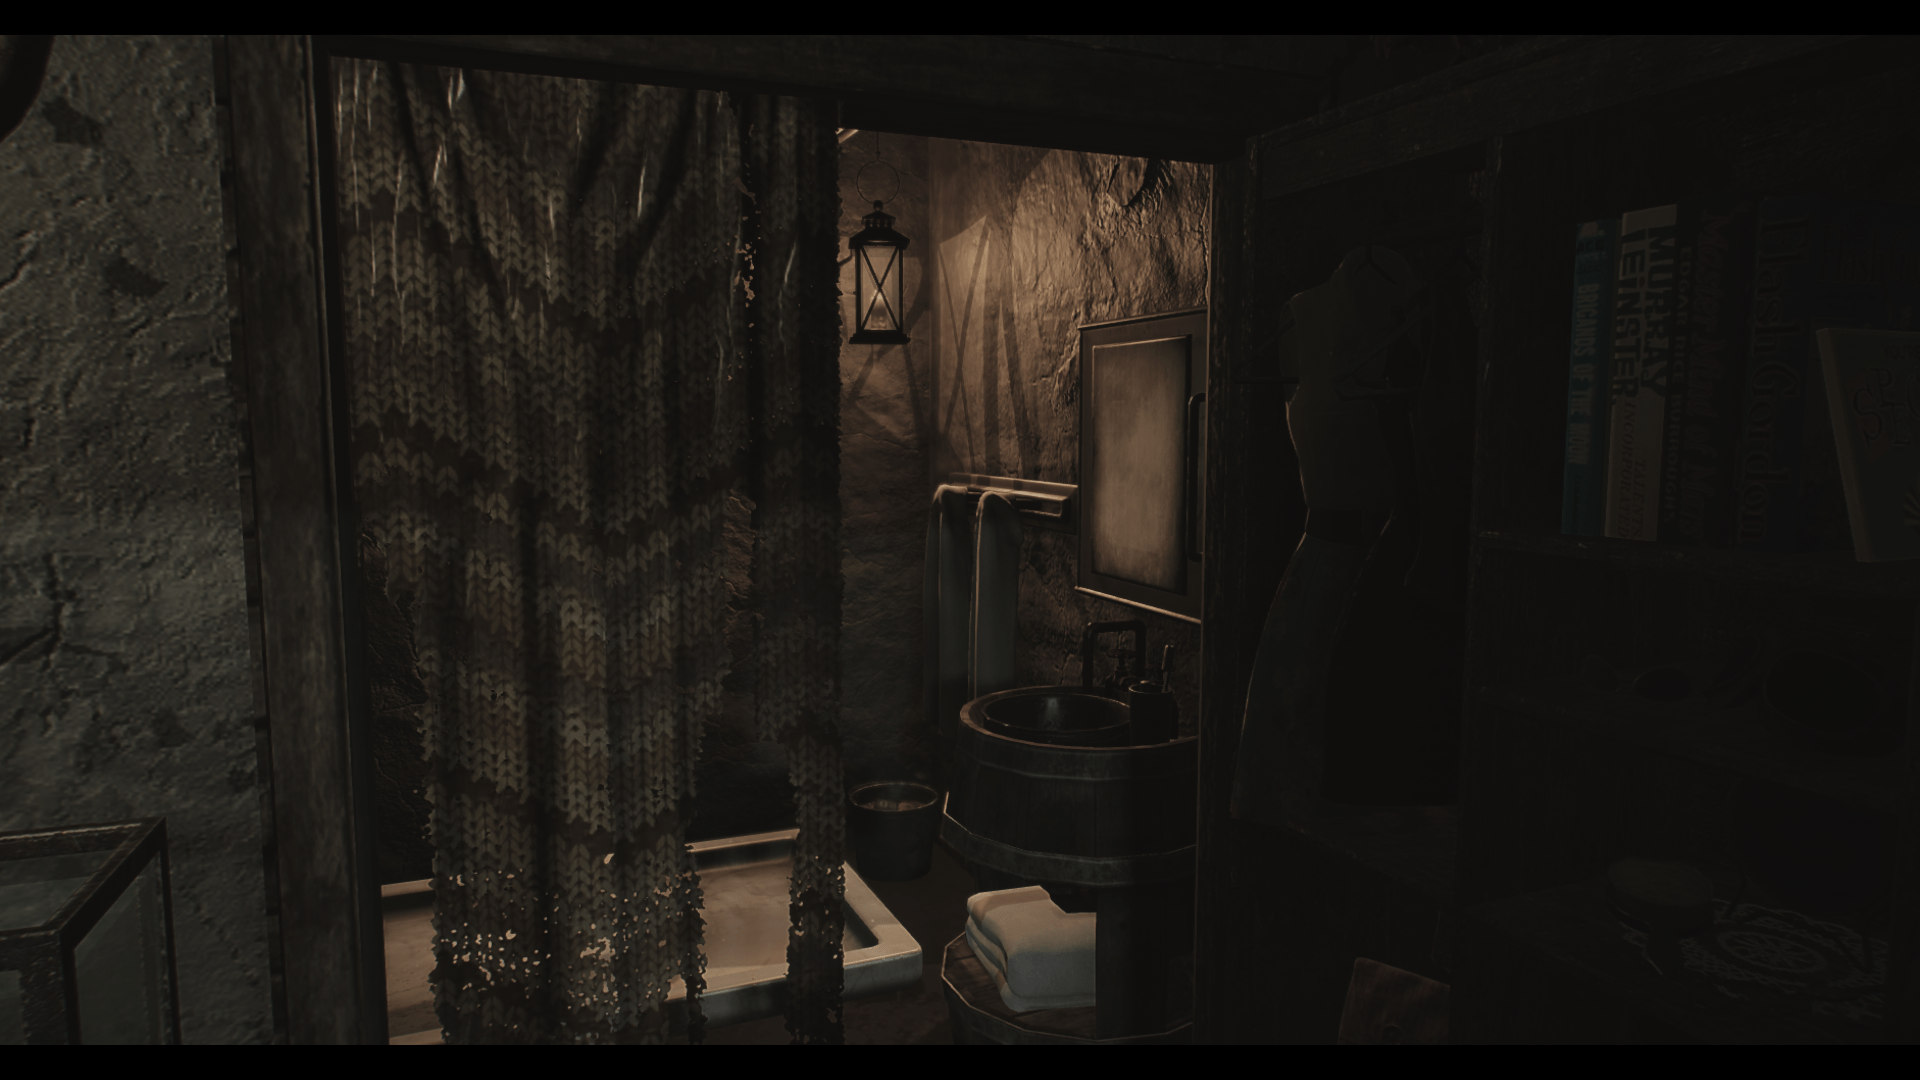 Fallout 4 Player Home Mods: Underhouse, Bunker 13, Goodneighbor Apartment 